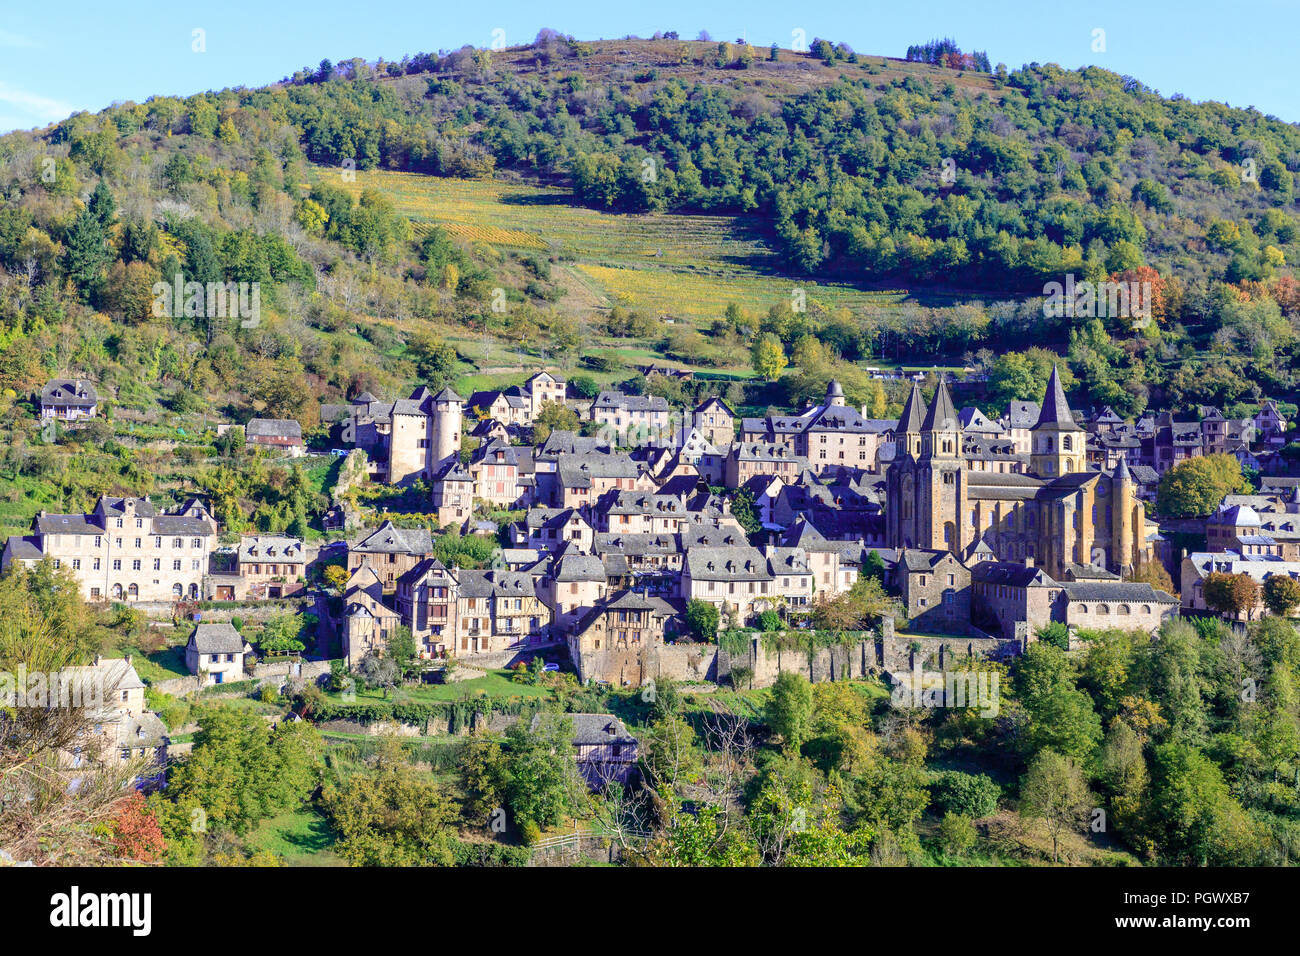 Frankreich, Aveyron, Conques, "Les Plus beaux villages de France (Schönste Dörfer Frankreichs), fahren Sie auf der El Camino de Santiago, allgemeine v Stoppen Stockfoto